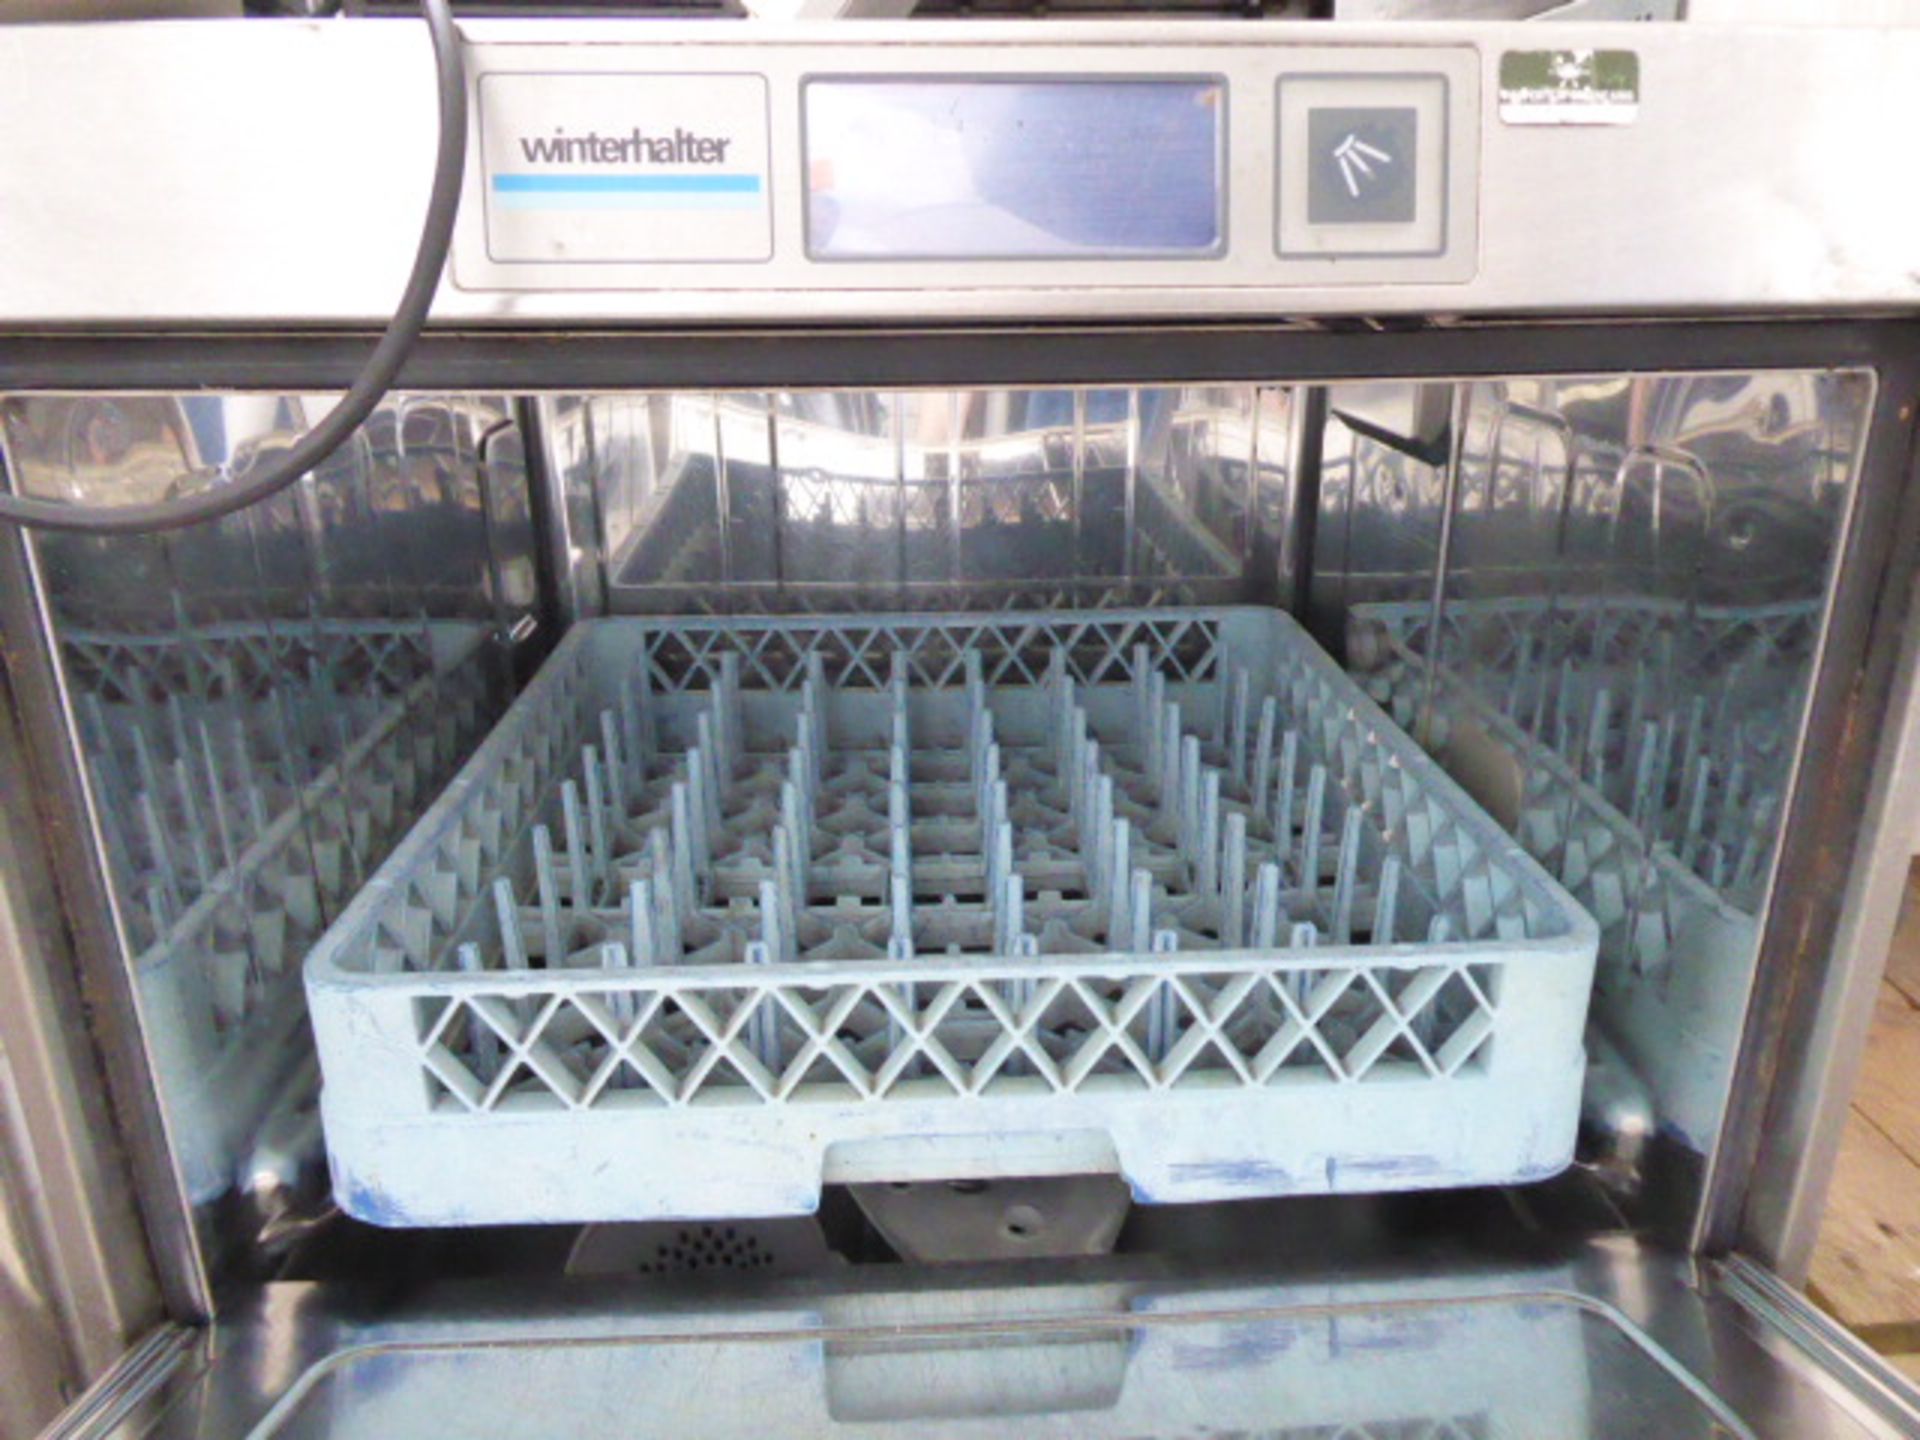 60cm Winterhalter under counter drop front dishwasher - Image 2 of 2